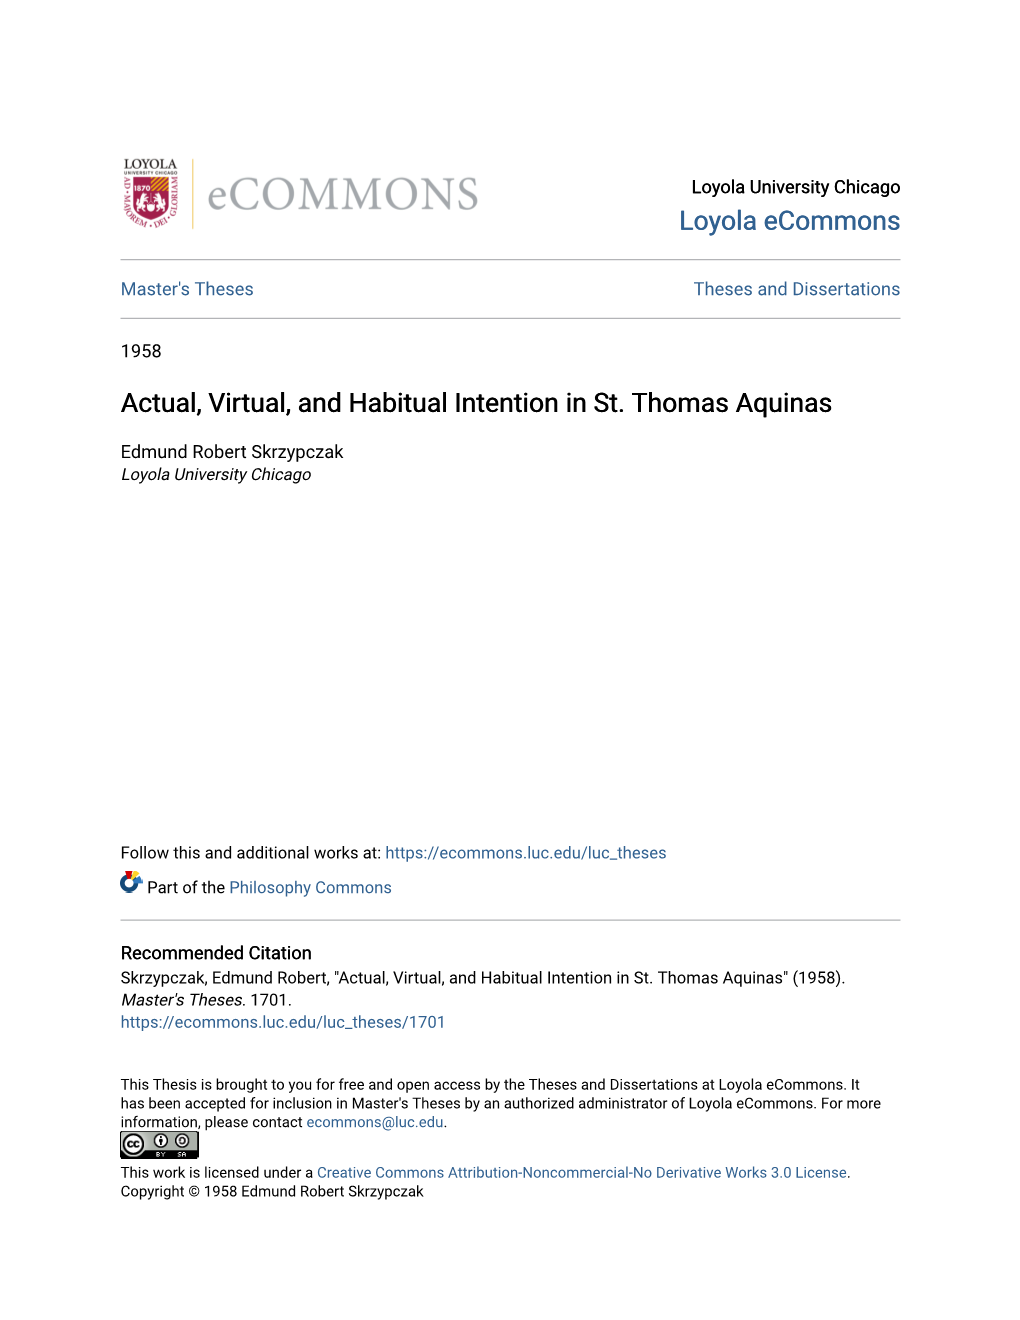 Actual, Virtual, and Habitual Intention in St. Thomas Aquinas